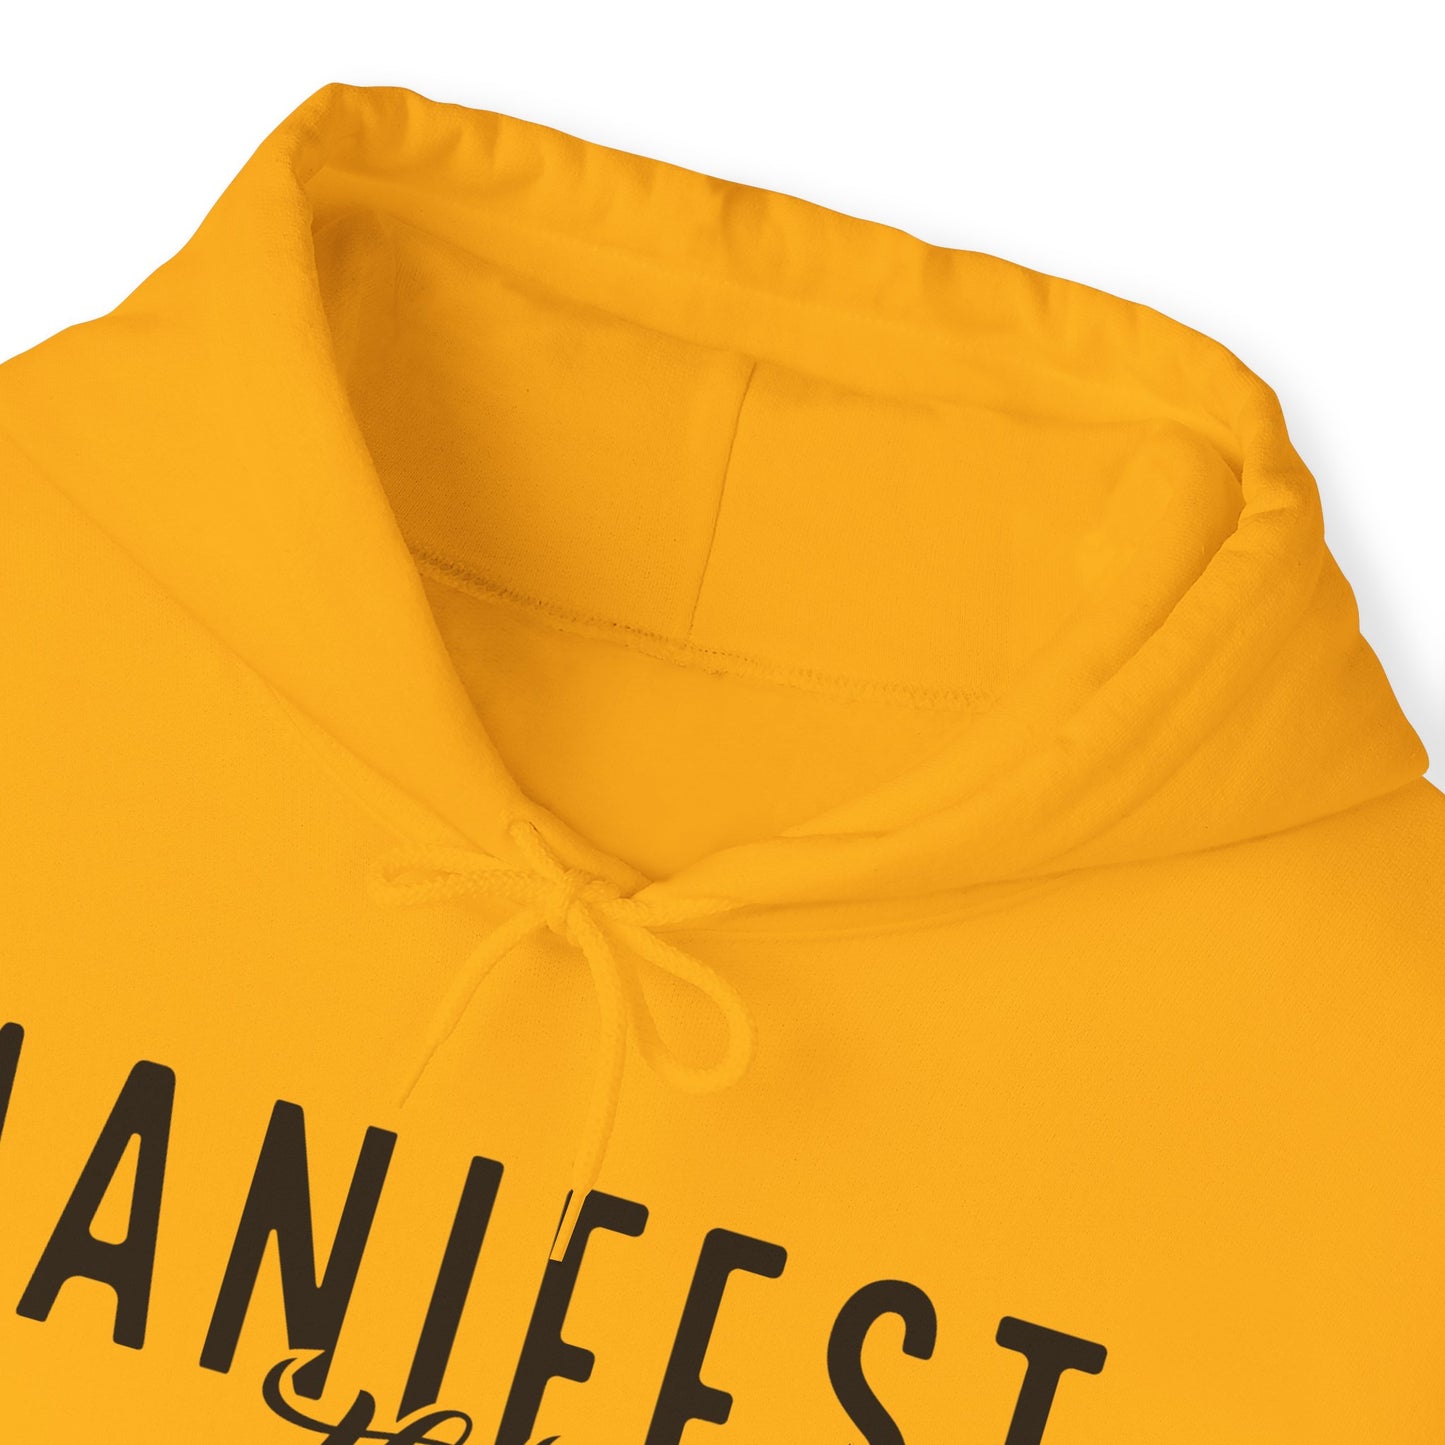 Manifest That S*** Hooded Sweatshirt